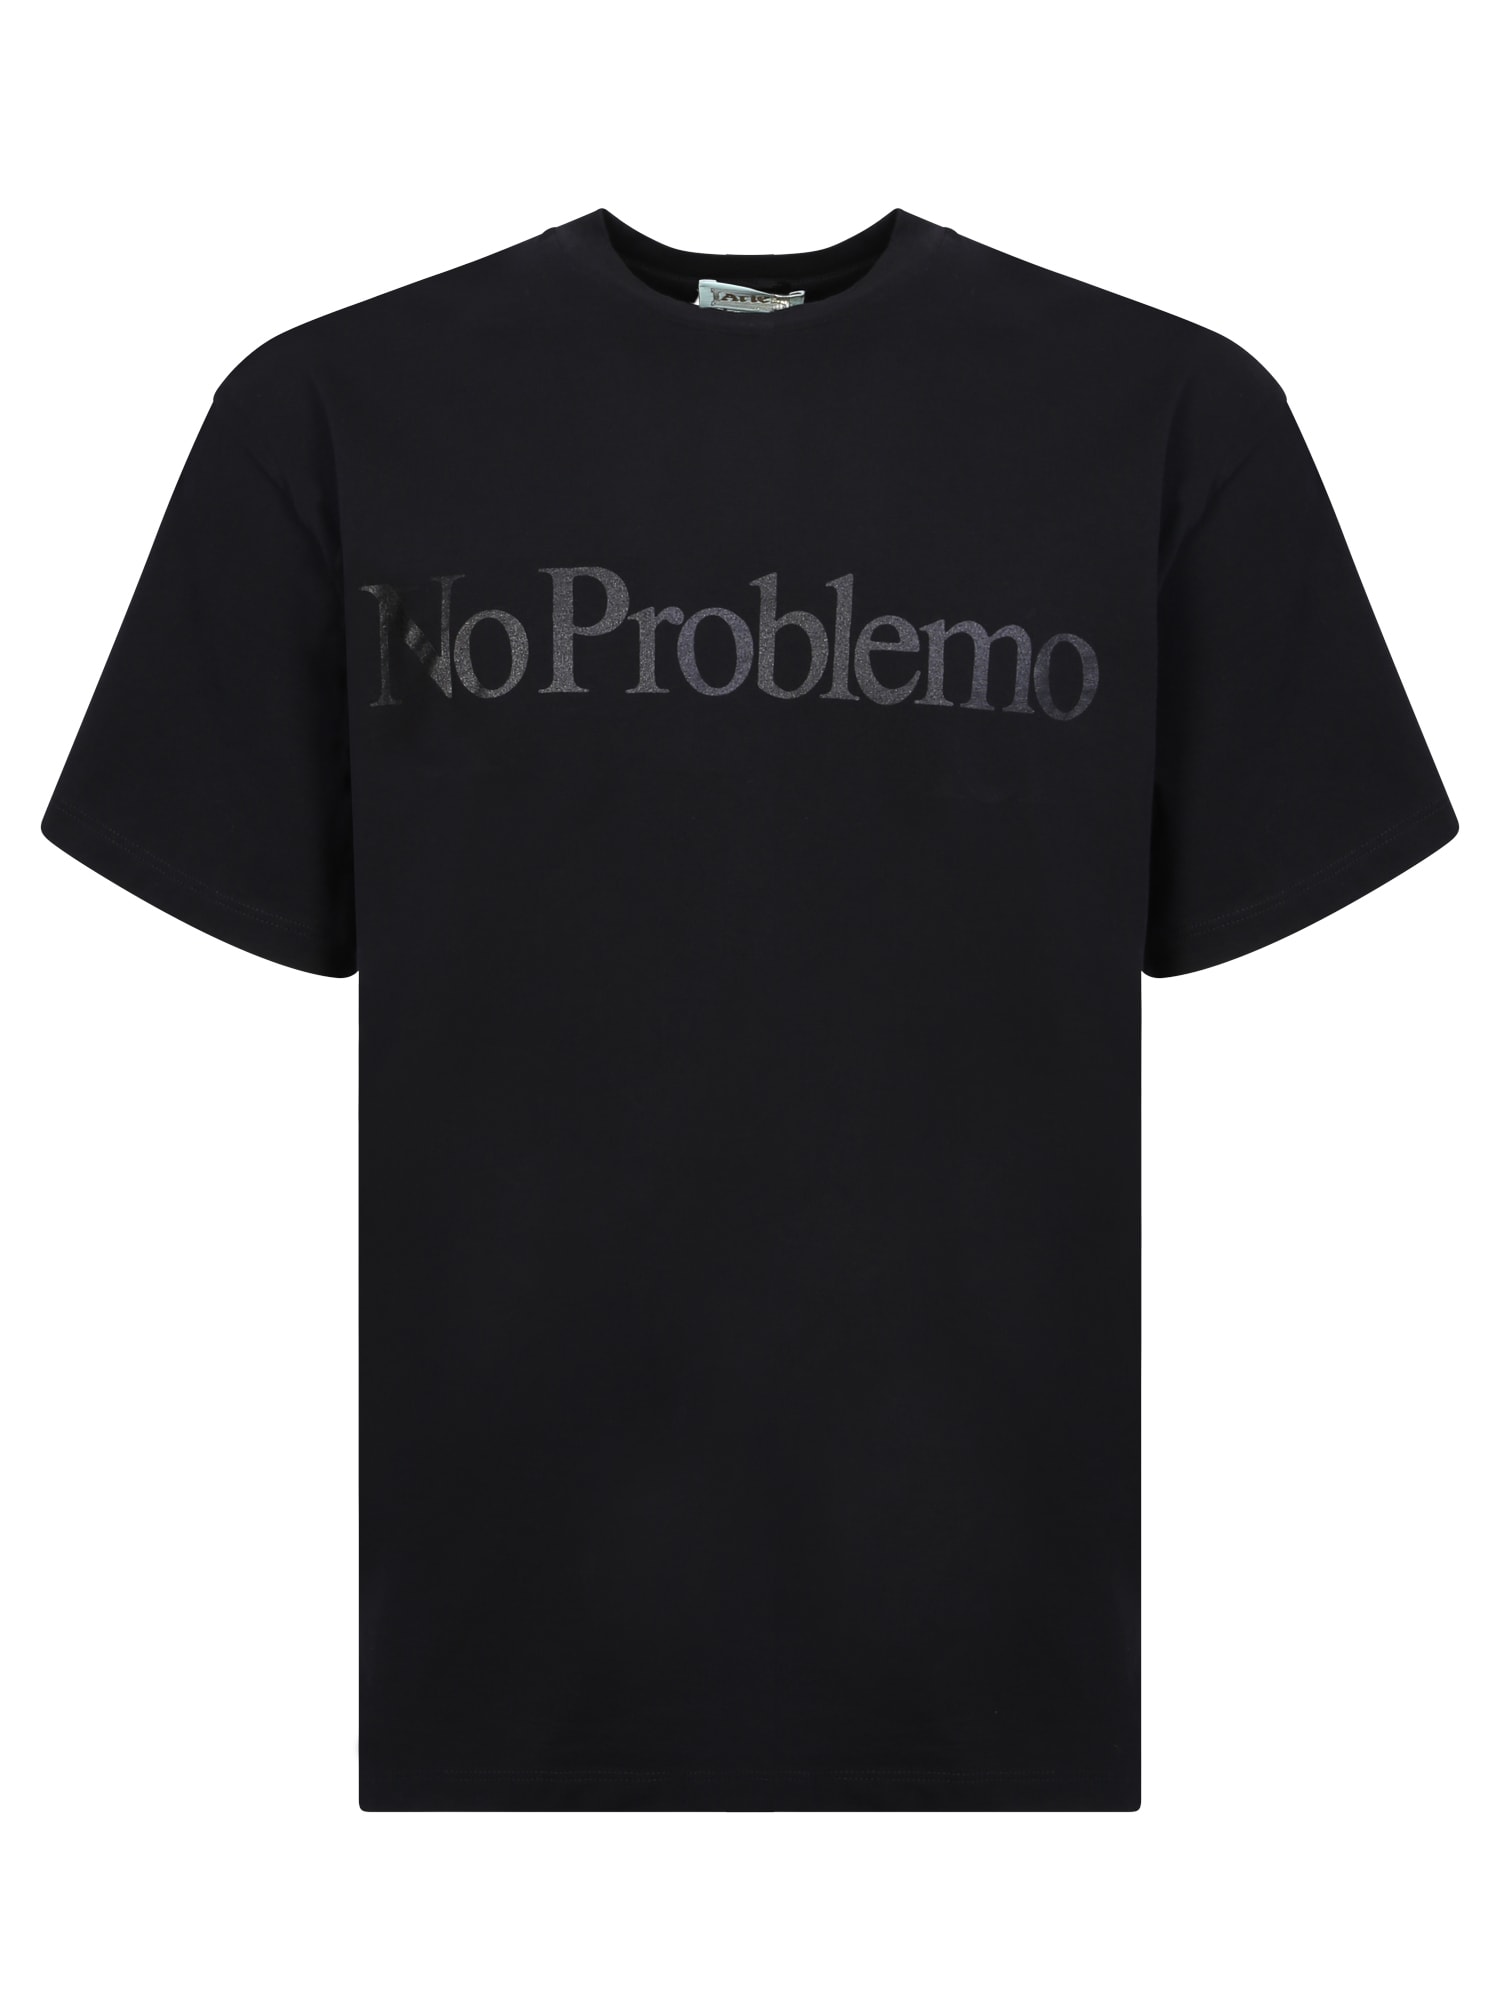 No Problemo T-shirt